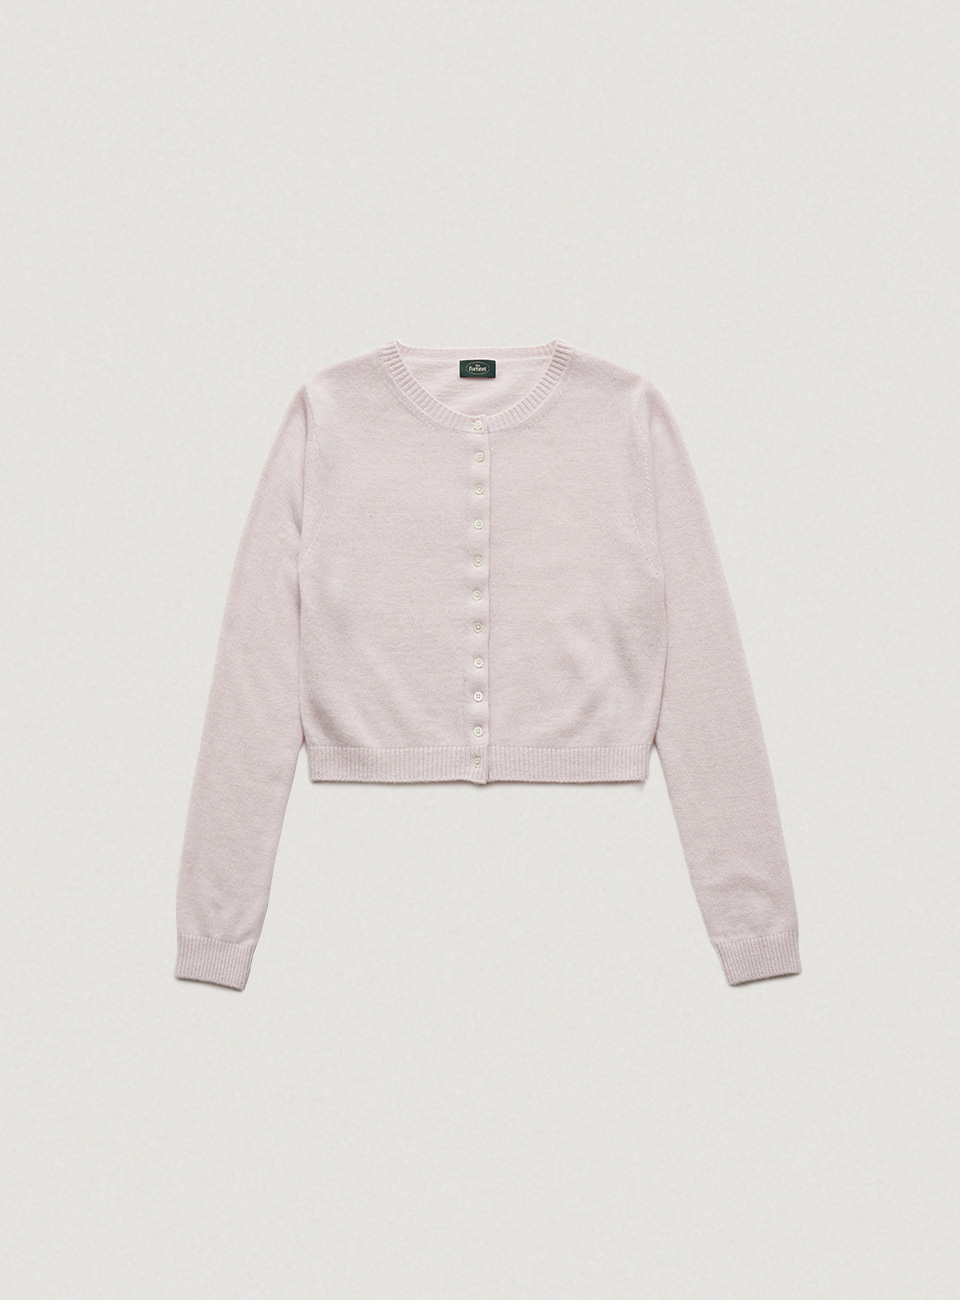 Pale Pink Classic Cropped Knit Cardigan[6월 초 순차 배송]